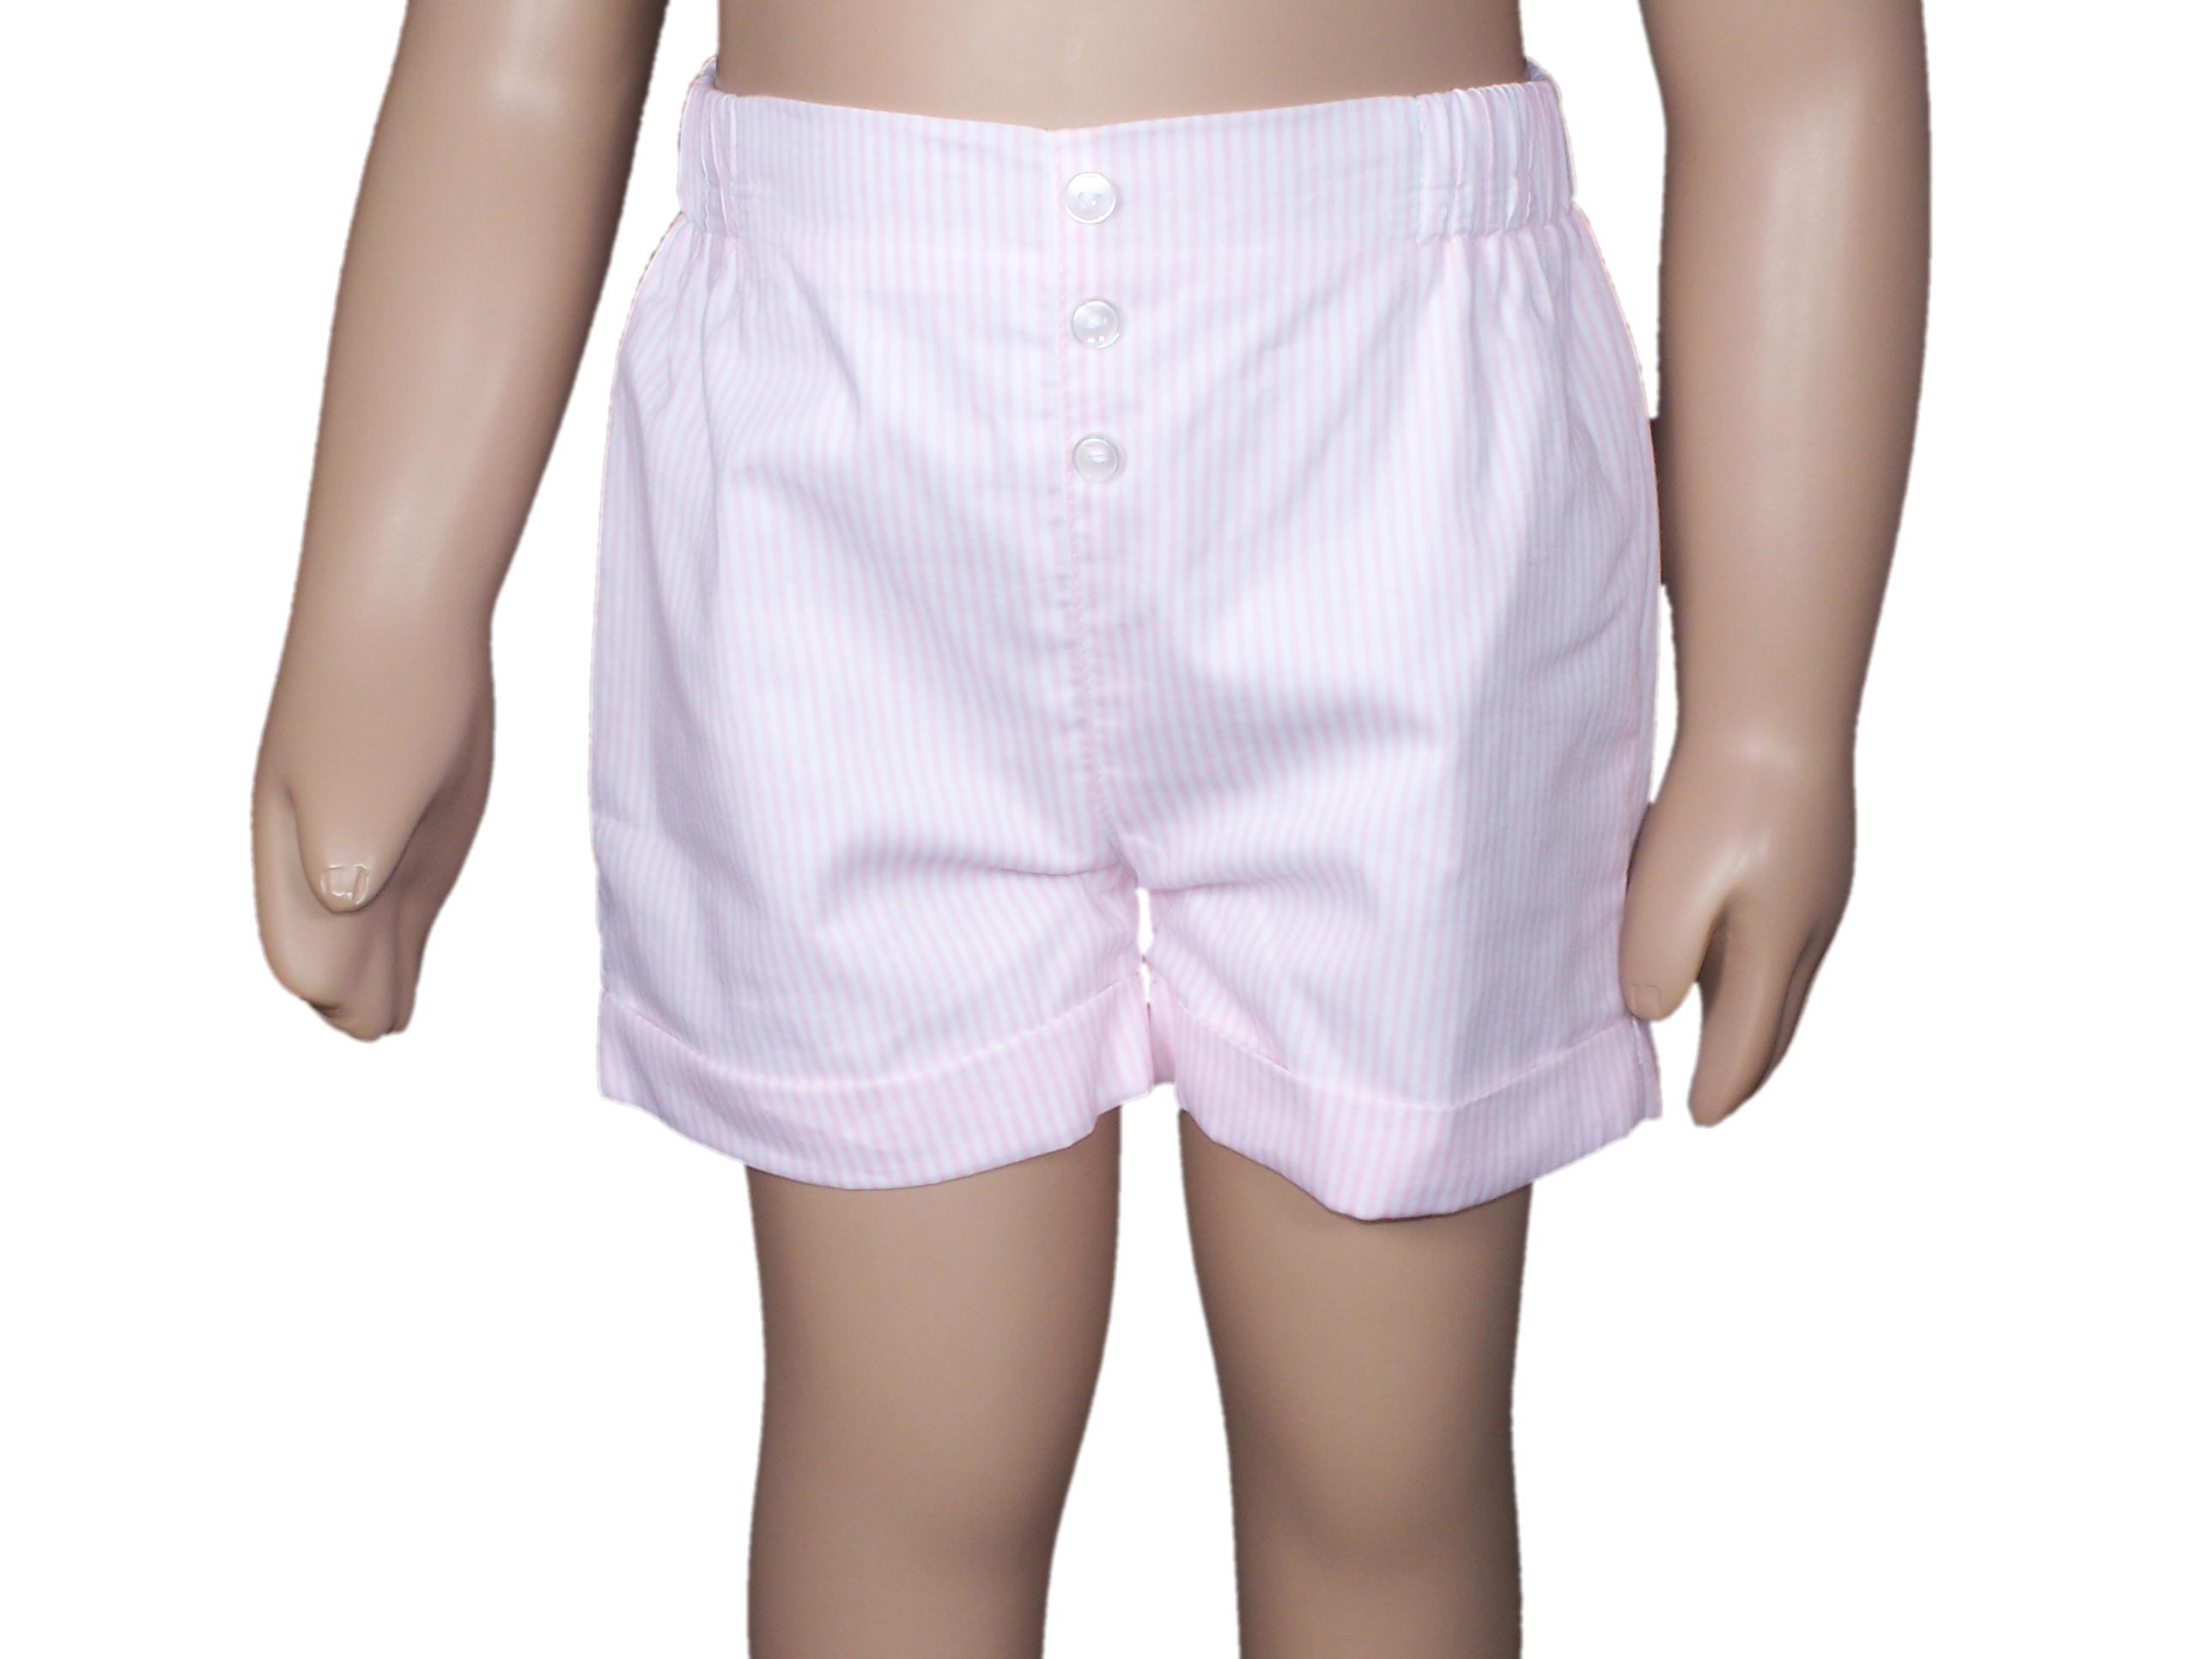 Foto Pantalón de rayas rosa y blanco de Laranjinha-6 meses foto 310936